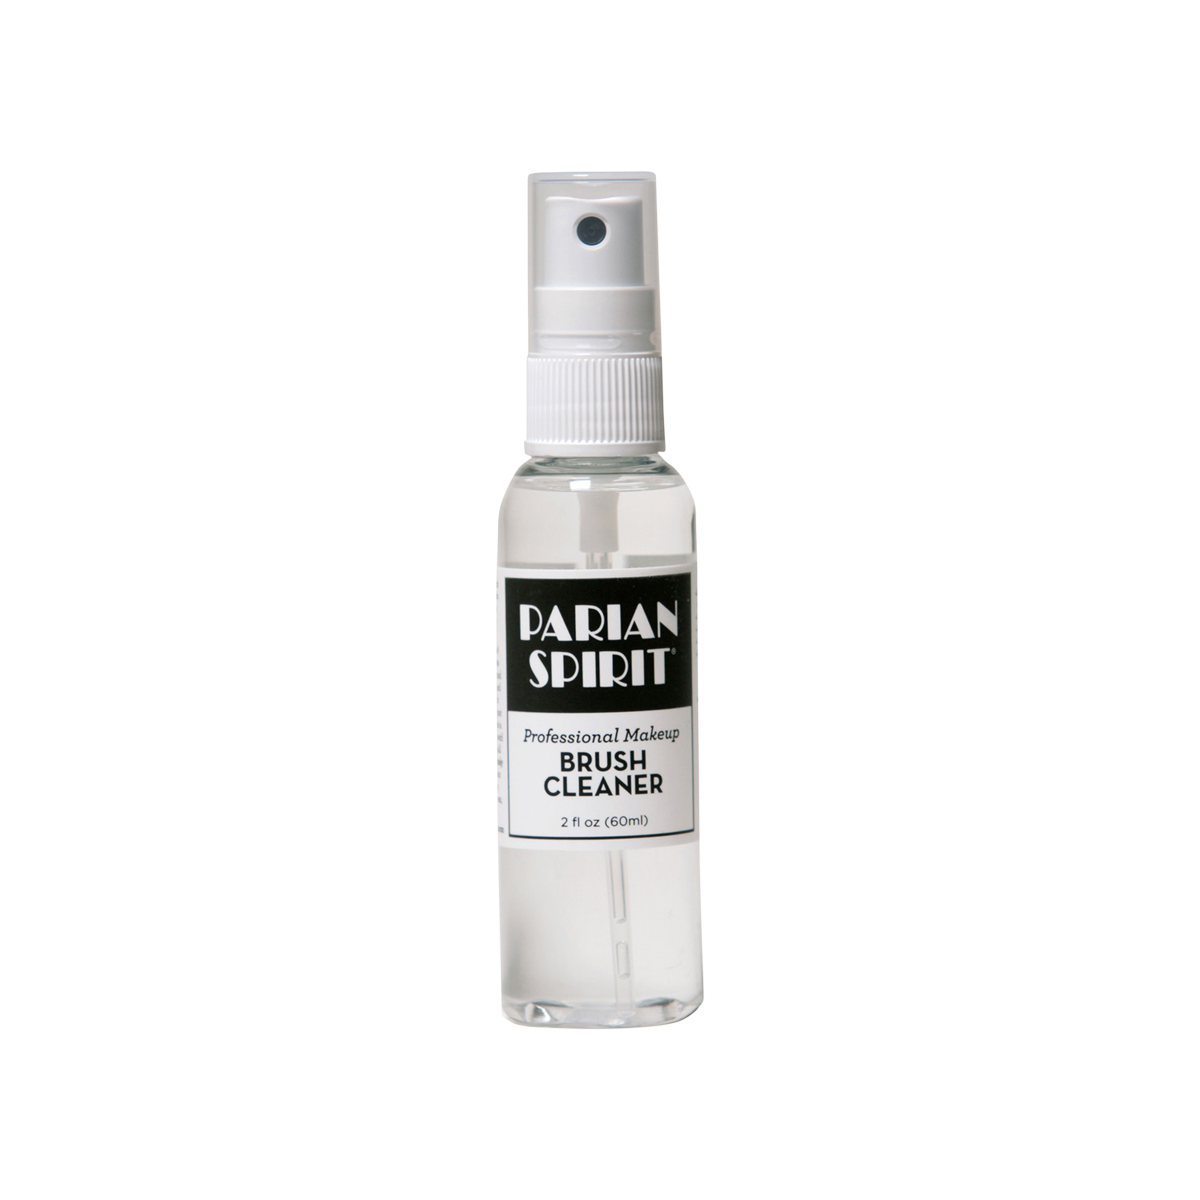 Parian Spirit - Professional Make-up Brush Cleaner Pump